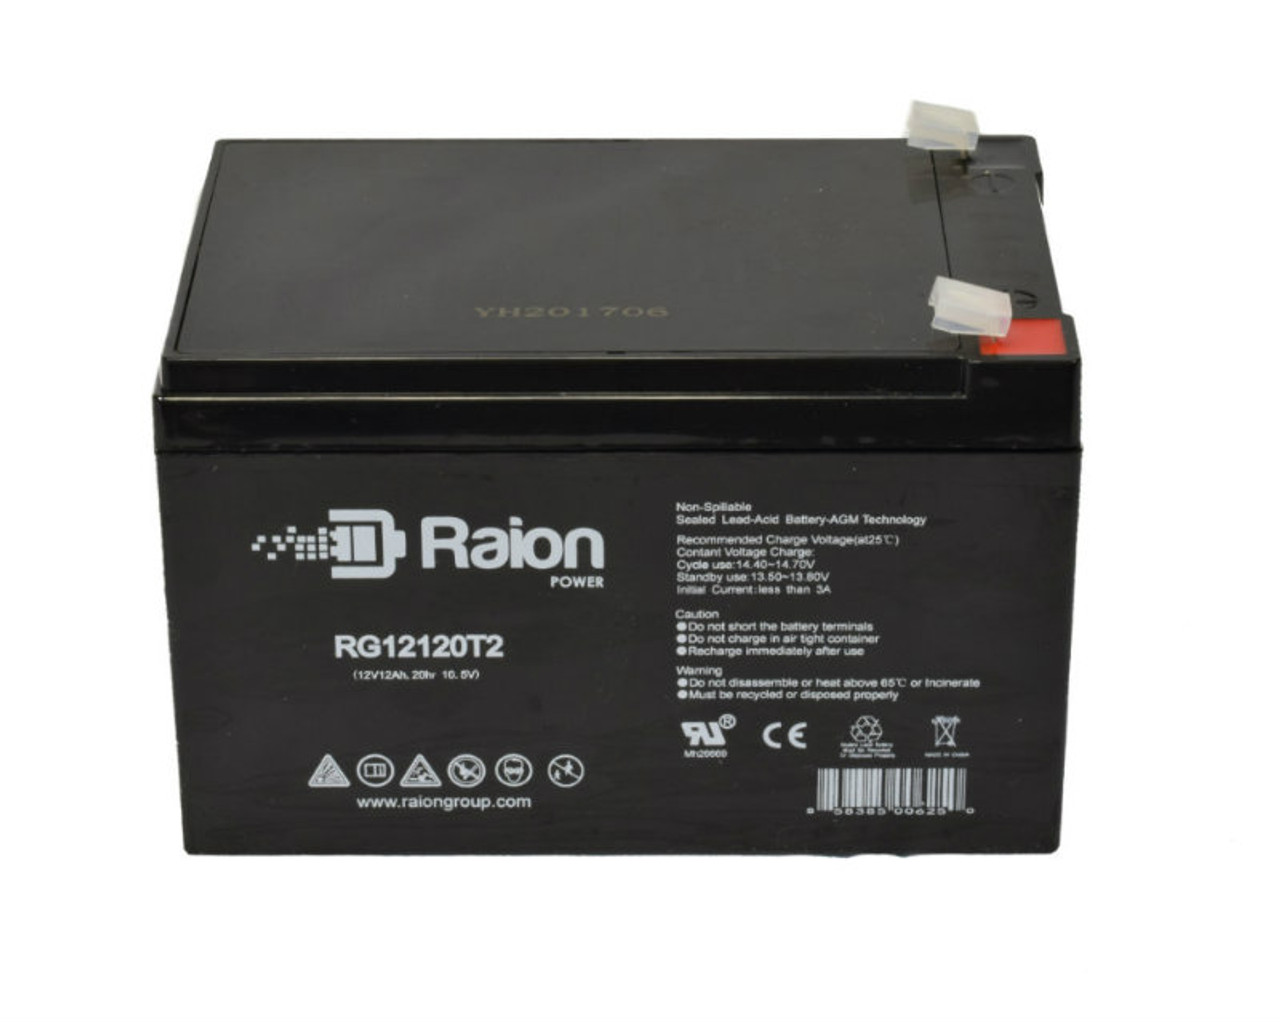 Raion Power RG12120T2 SLA Battery for Oracle DC15-12